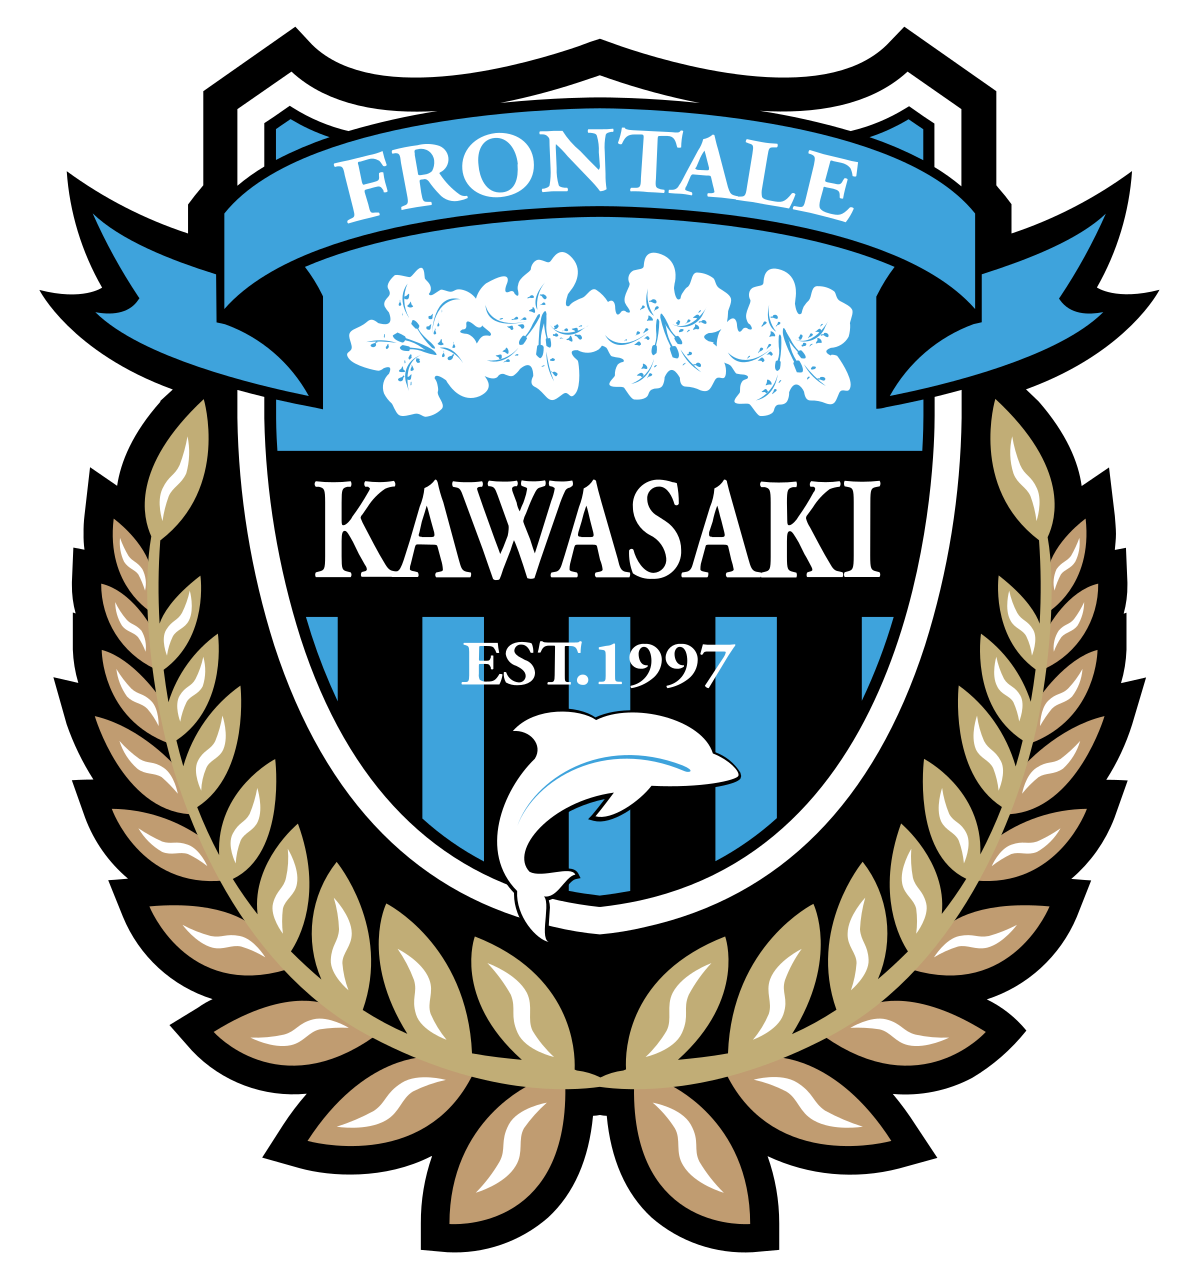 Frontale - Wikipedia